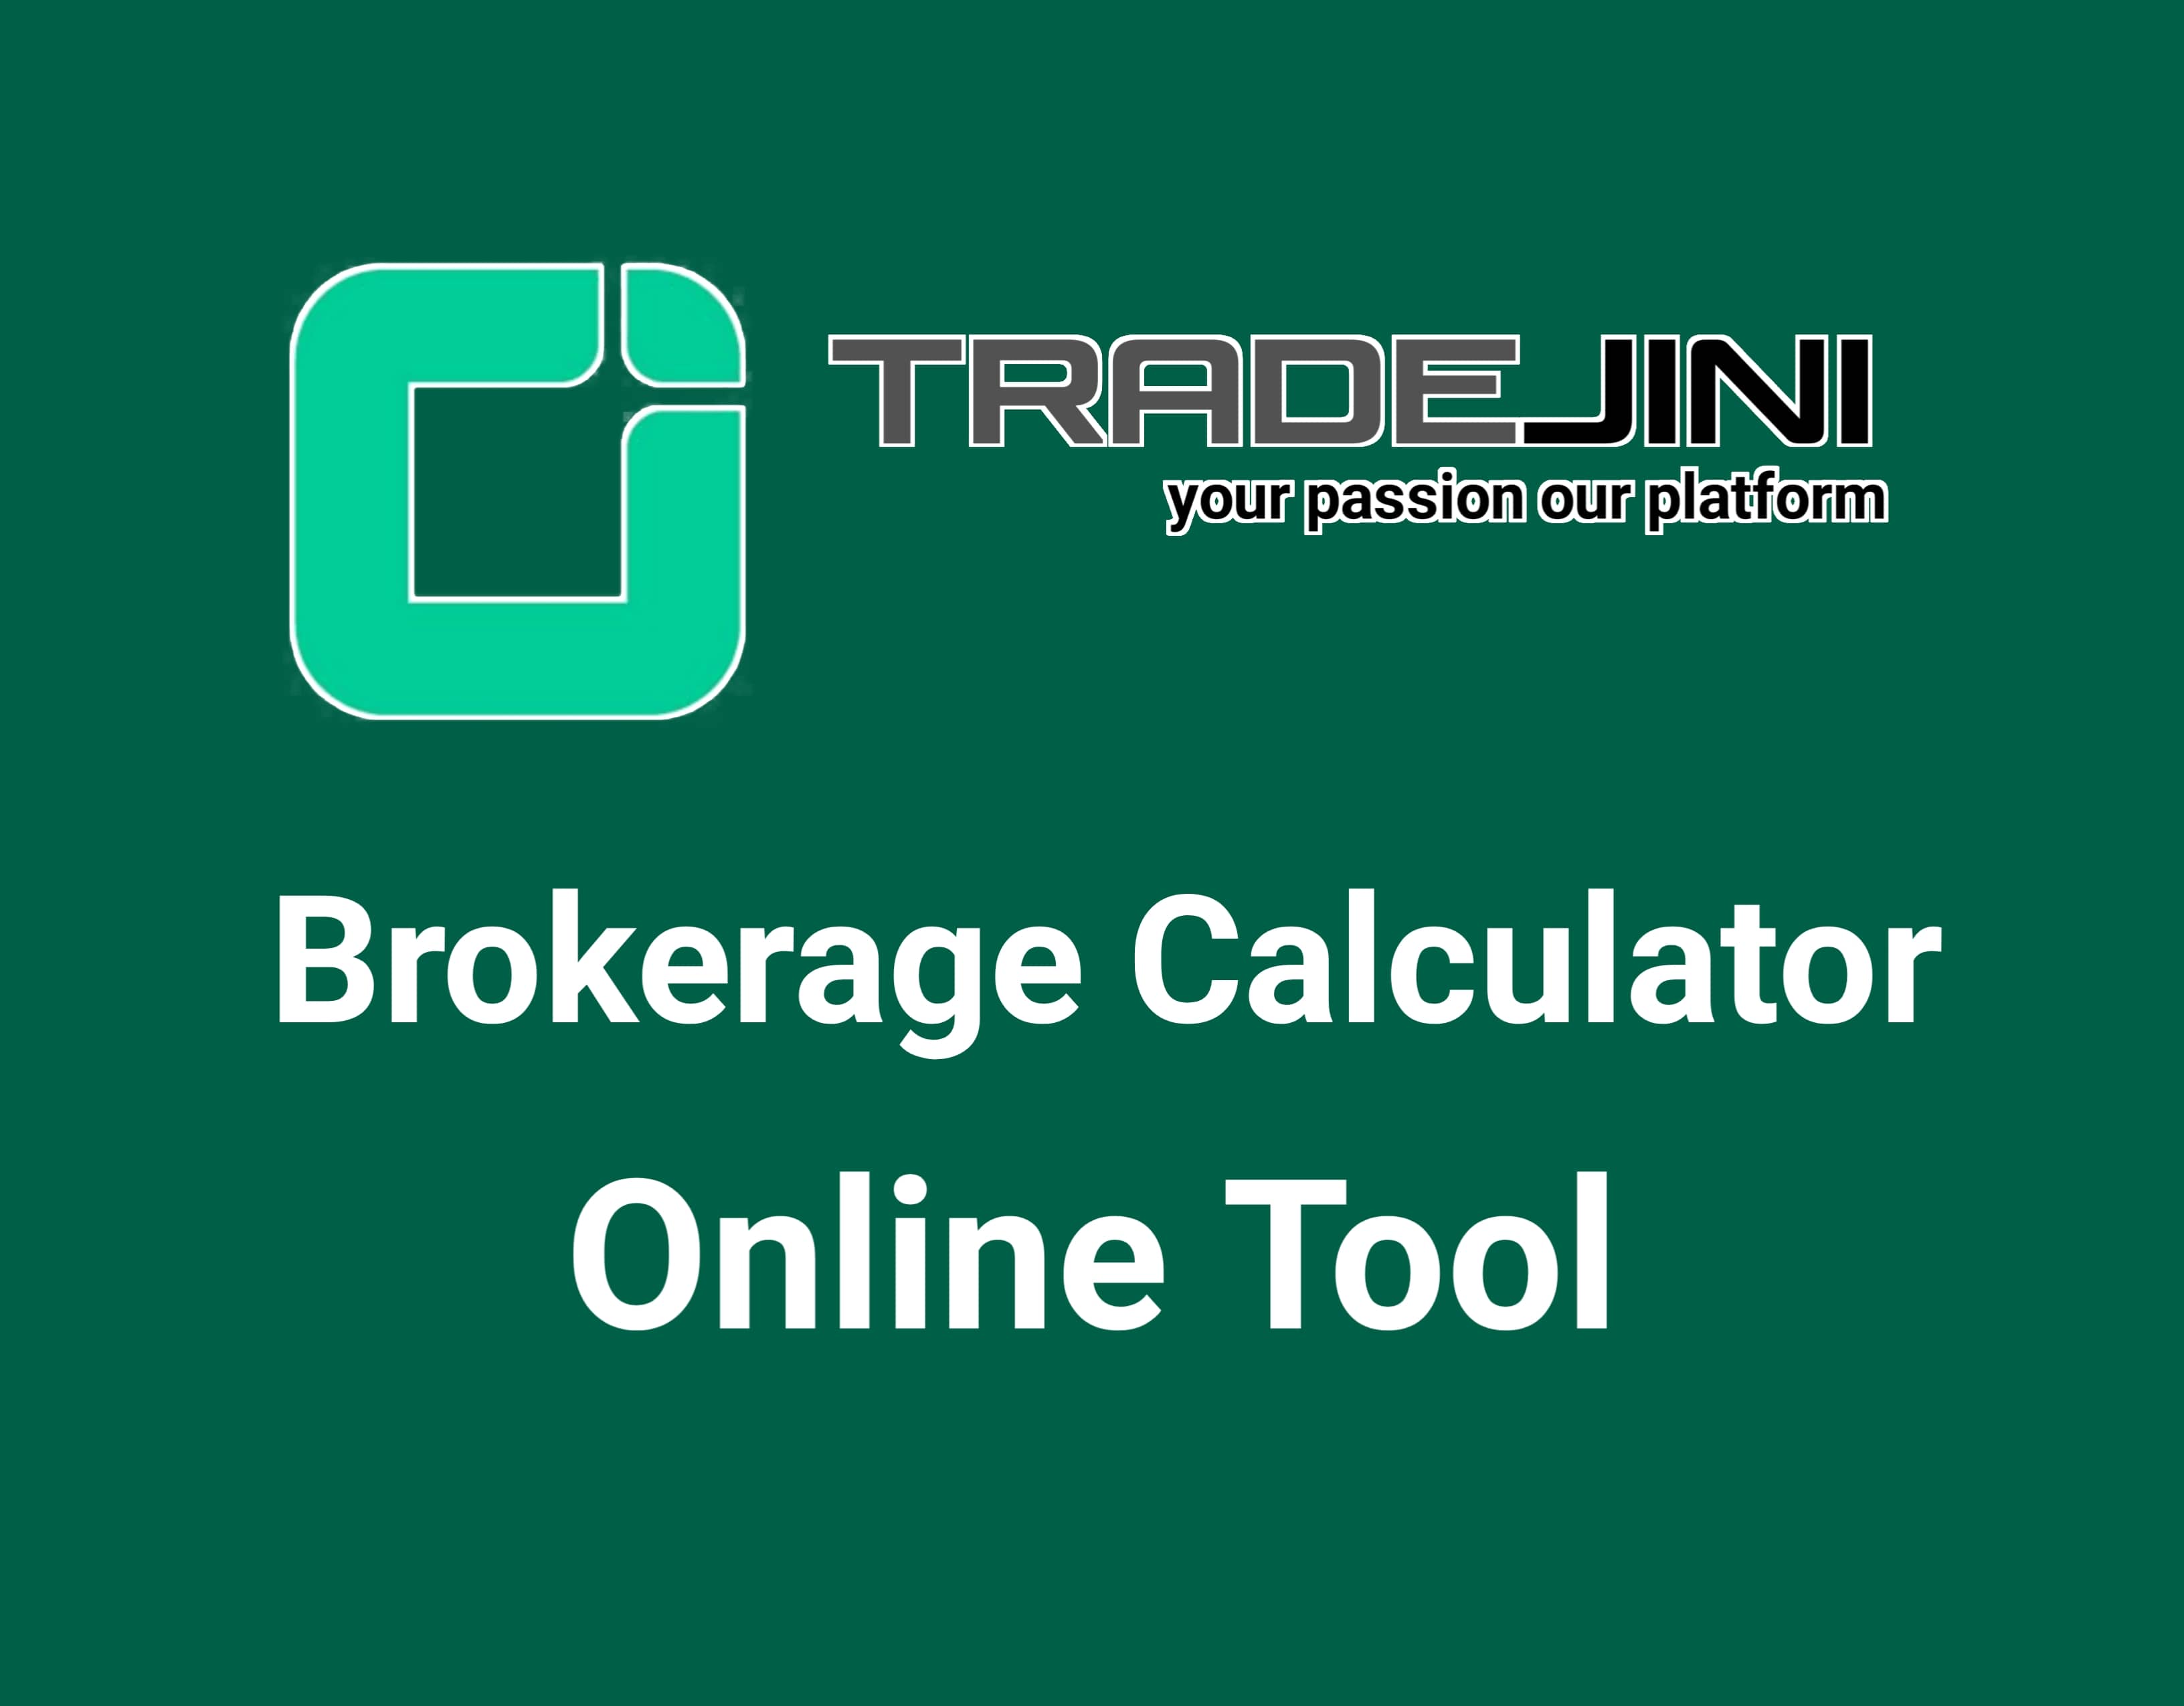 Tradejini Brokerage Calculator